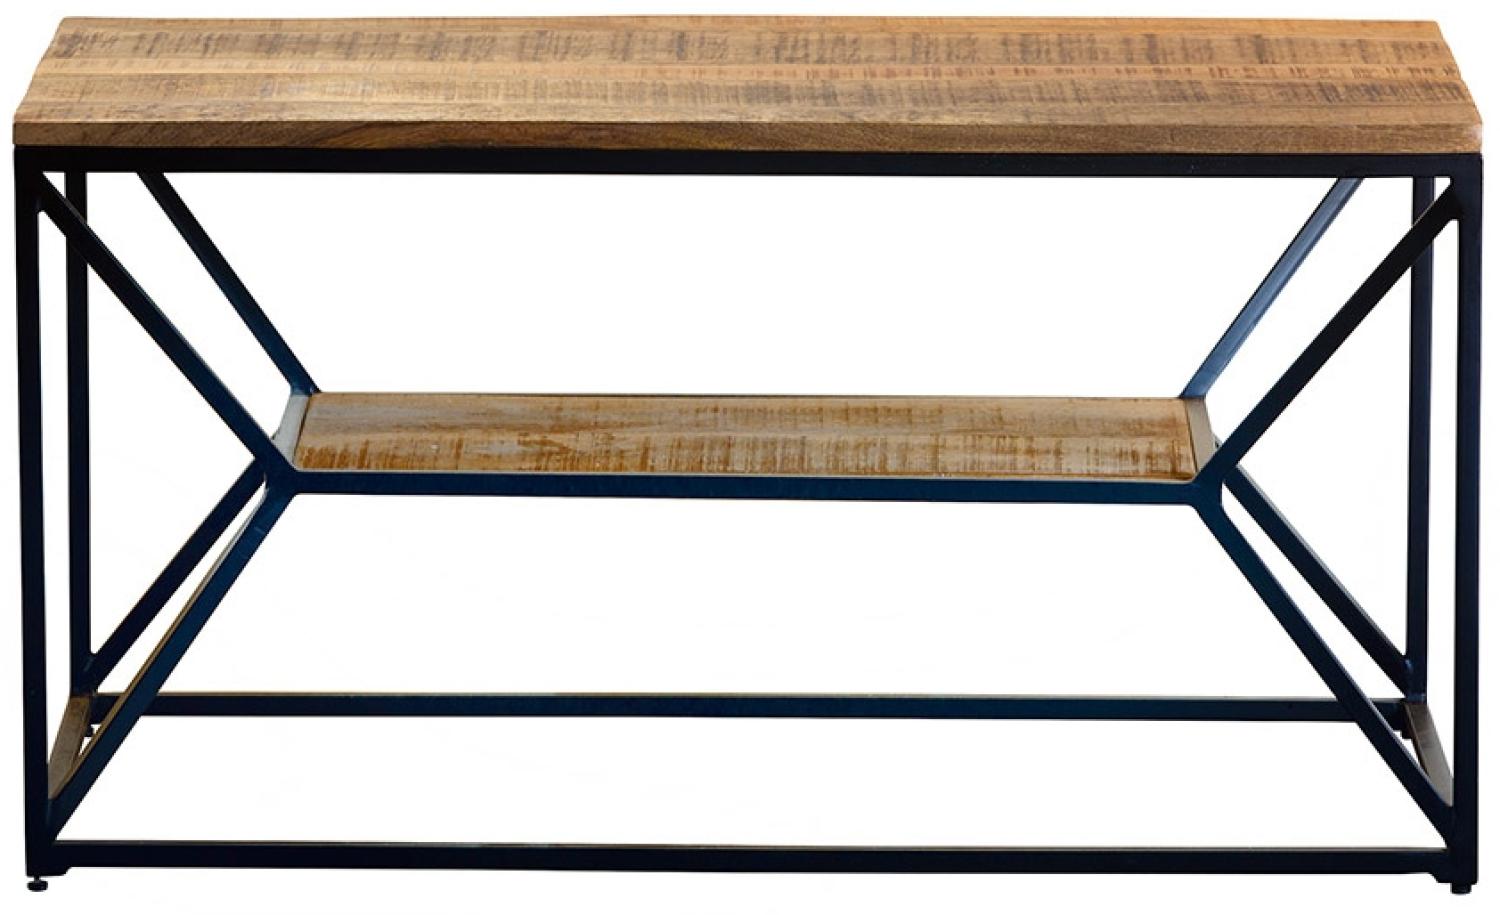 GILDE Sideboard, "Piatta", Mangoholz, naturfarben, schwarz, , L. 90 cm, B. 45 cm, H. 48 cm 42214 Bild 1